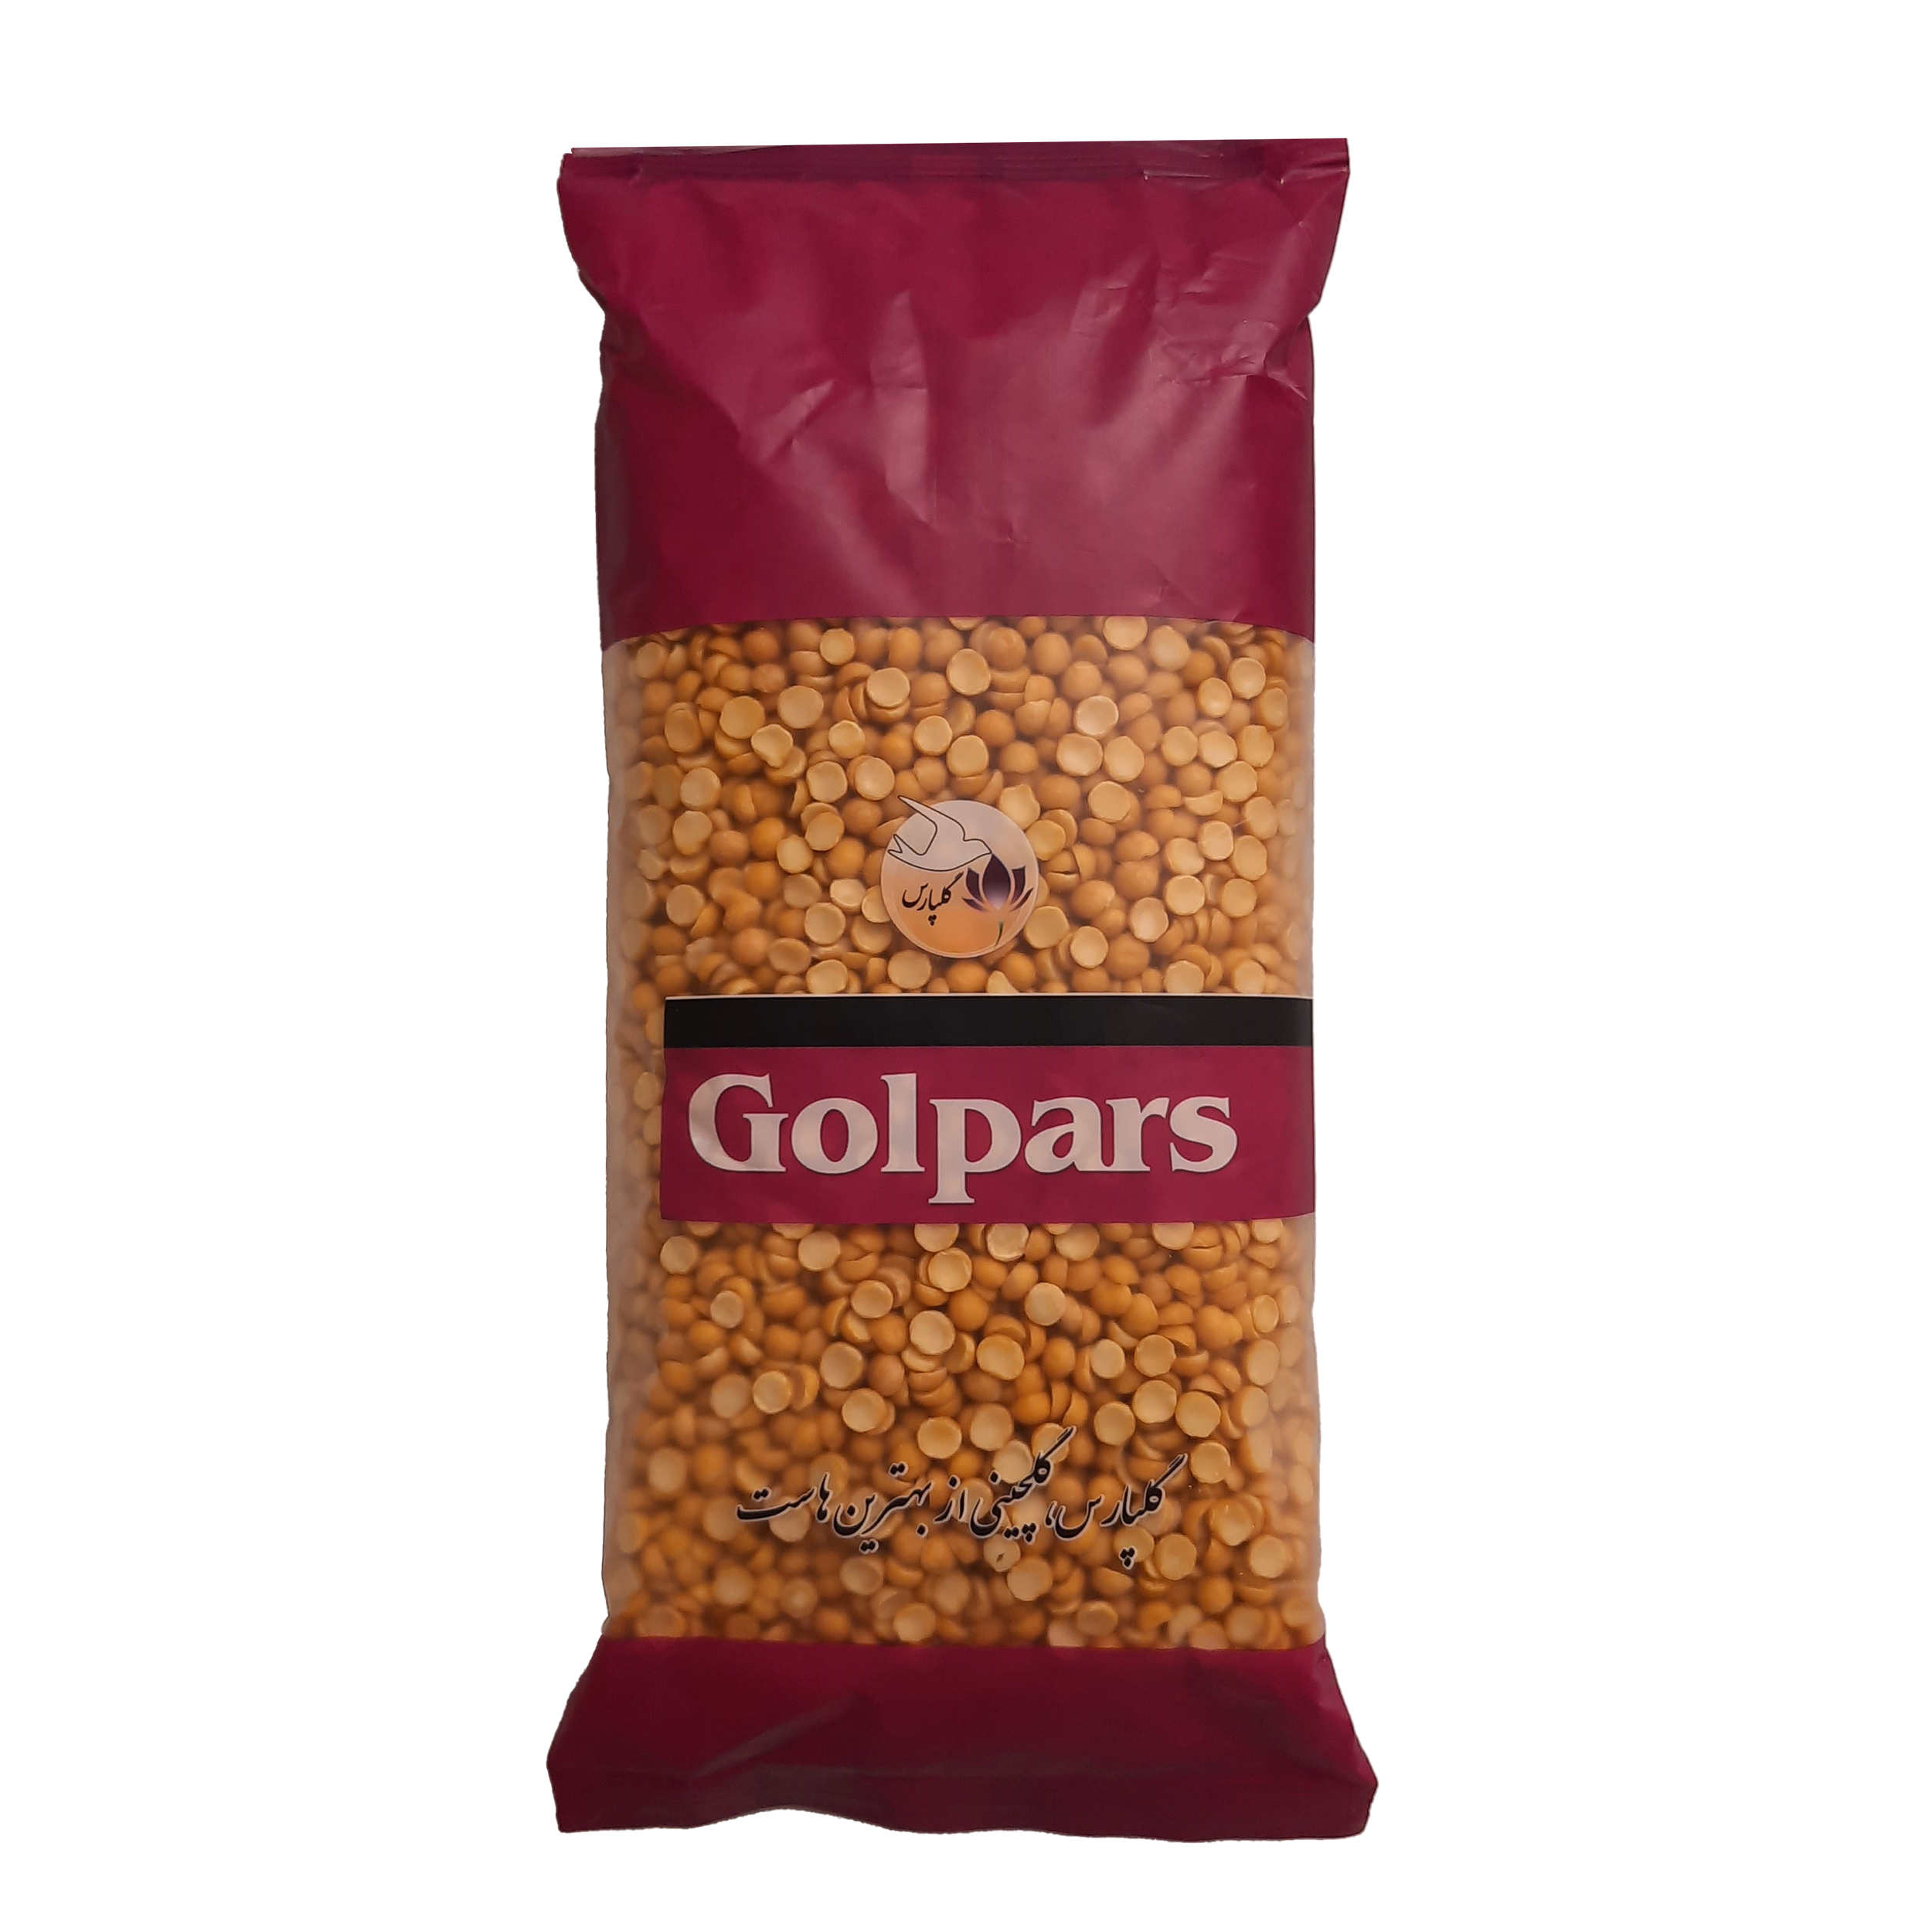 Golpars split peas - 700 grams